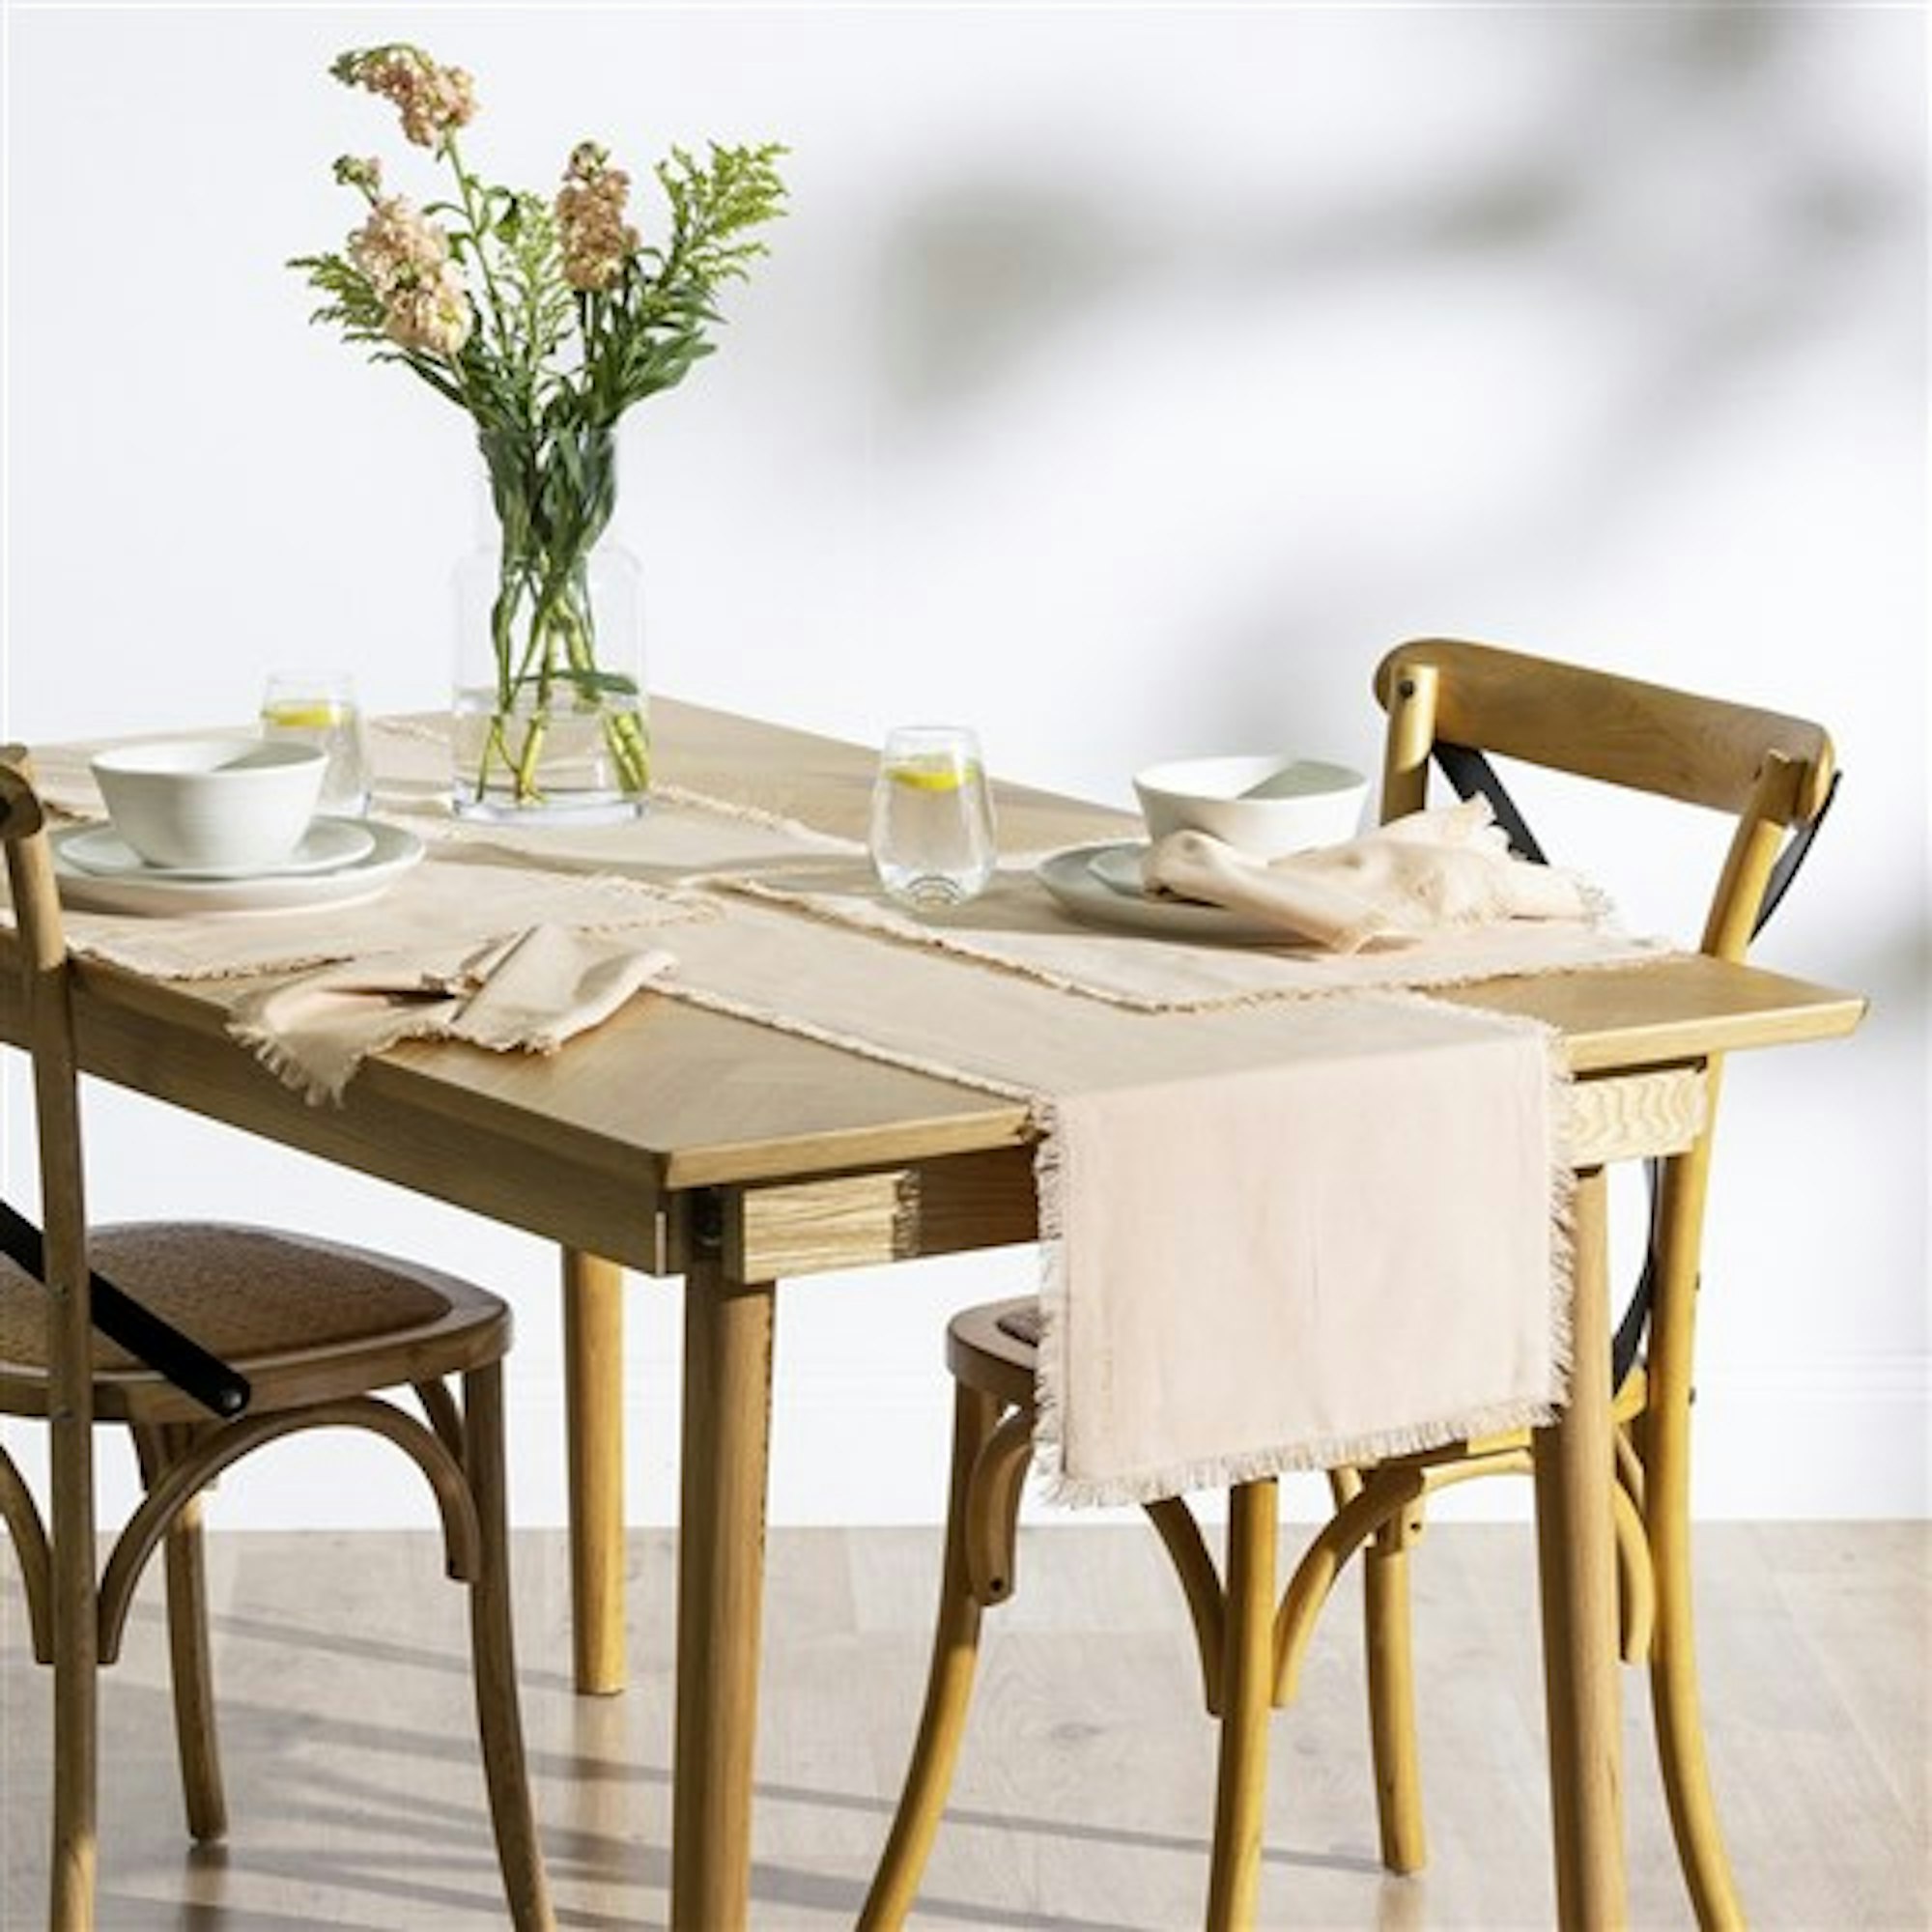 neutral table setting Scandinavian style